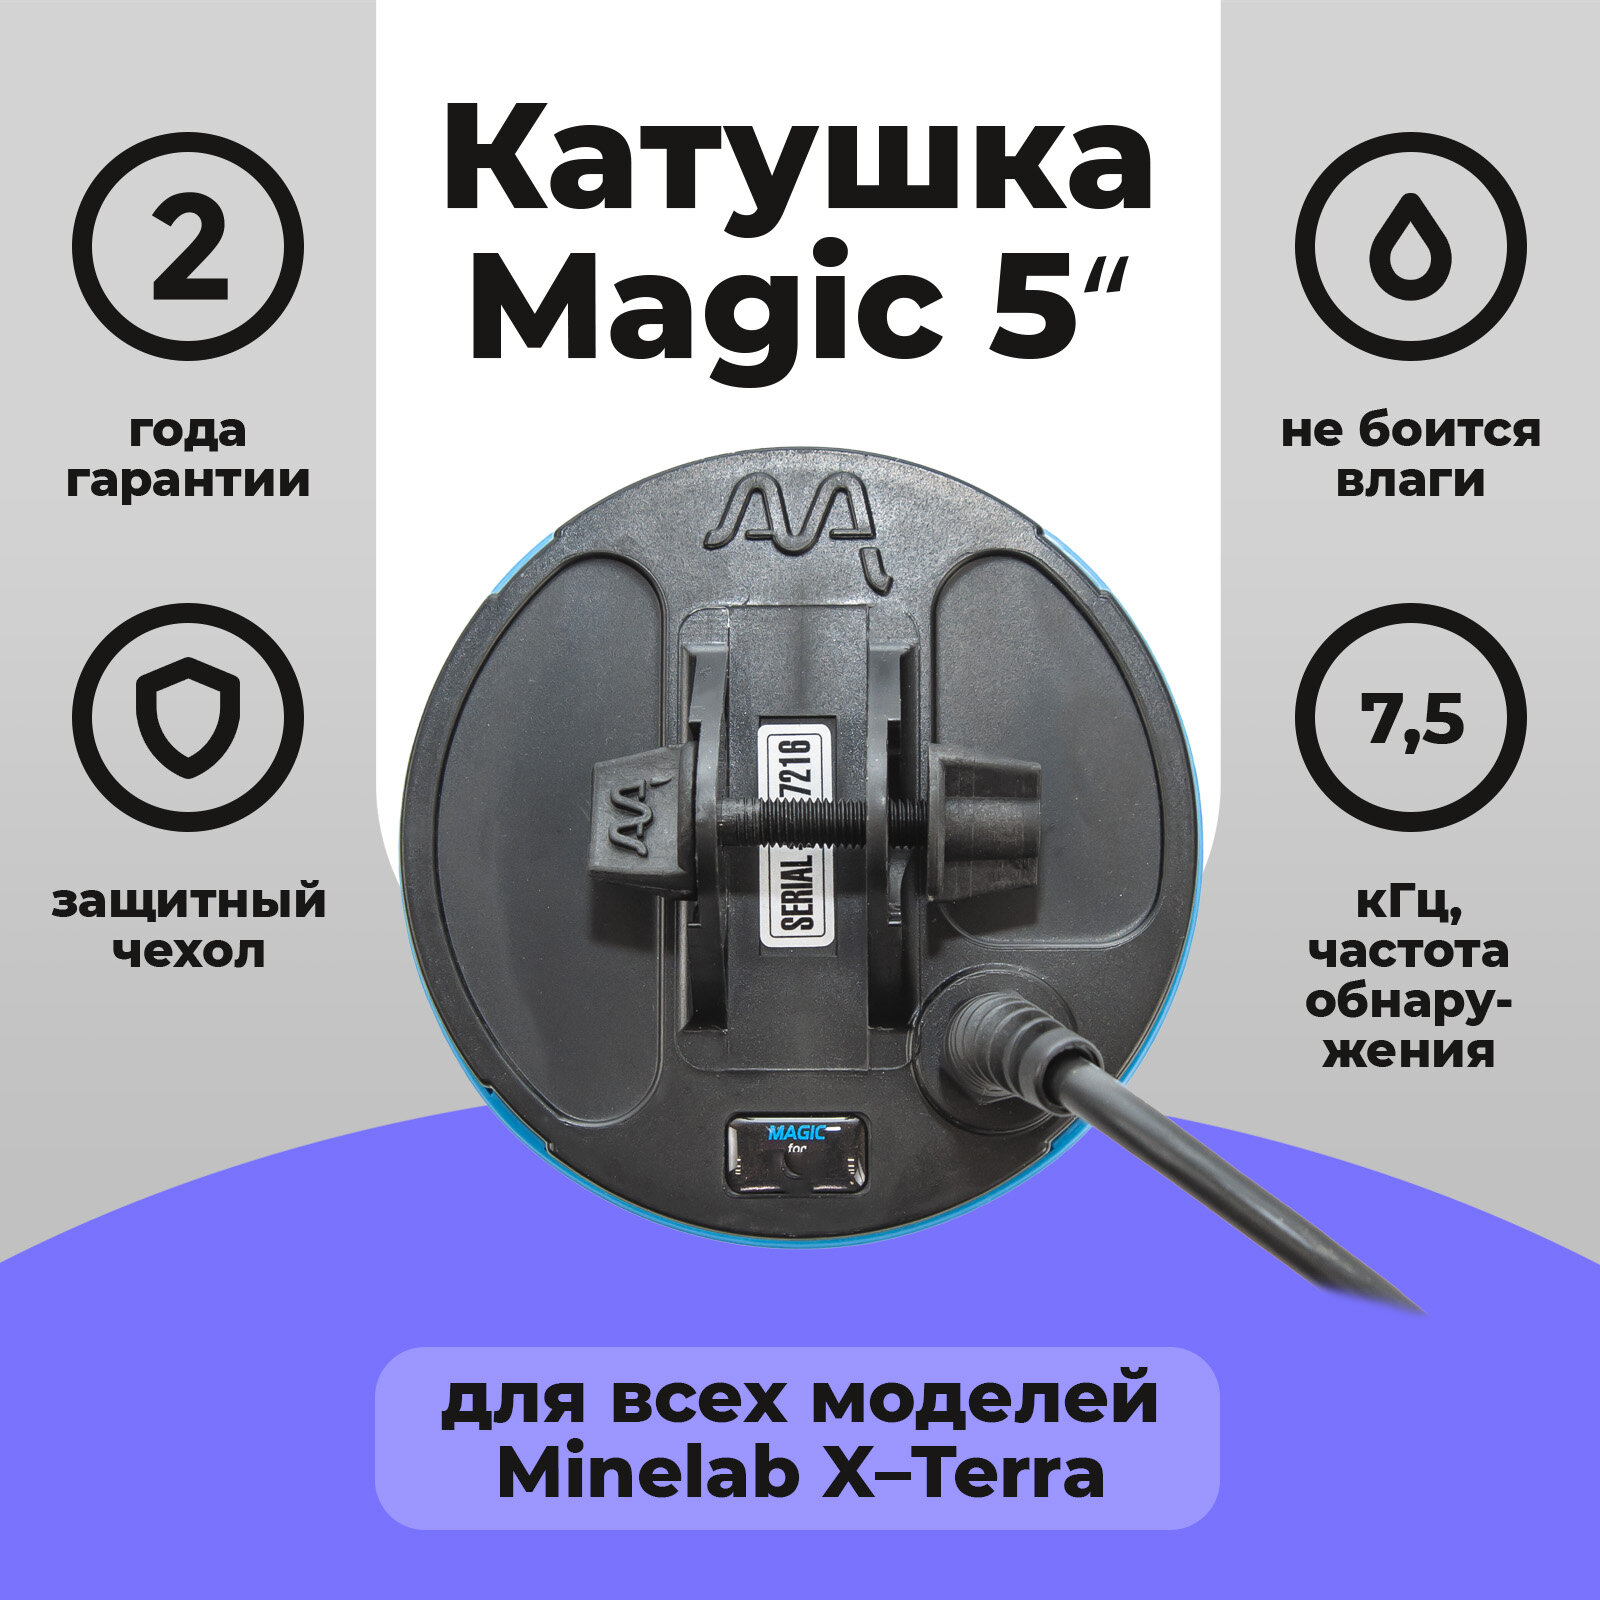 Катушка Magic 5 для X-Terra 7,5 кГц